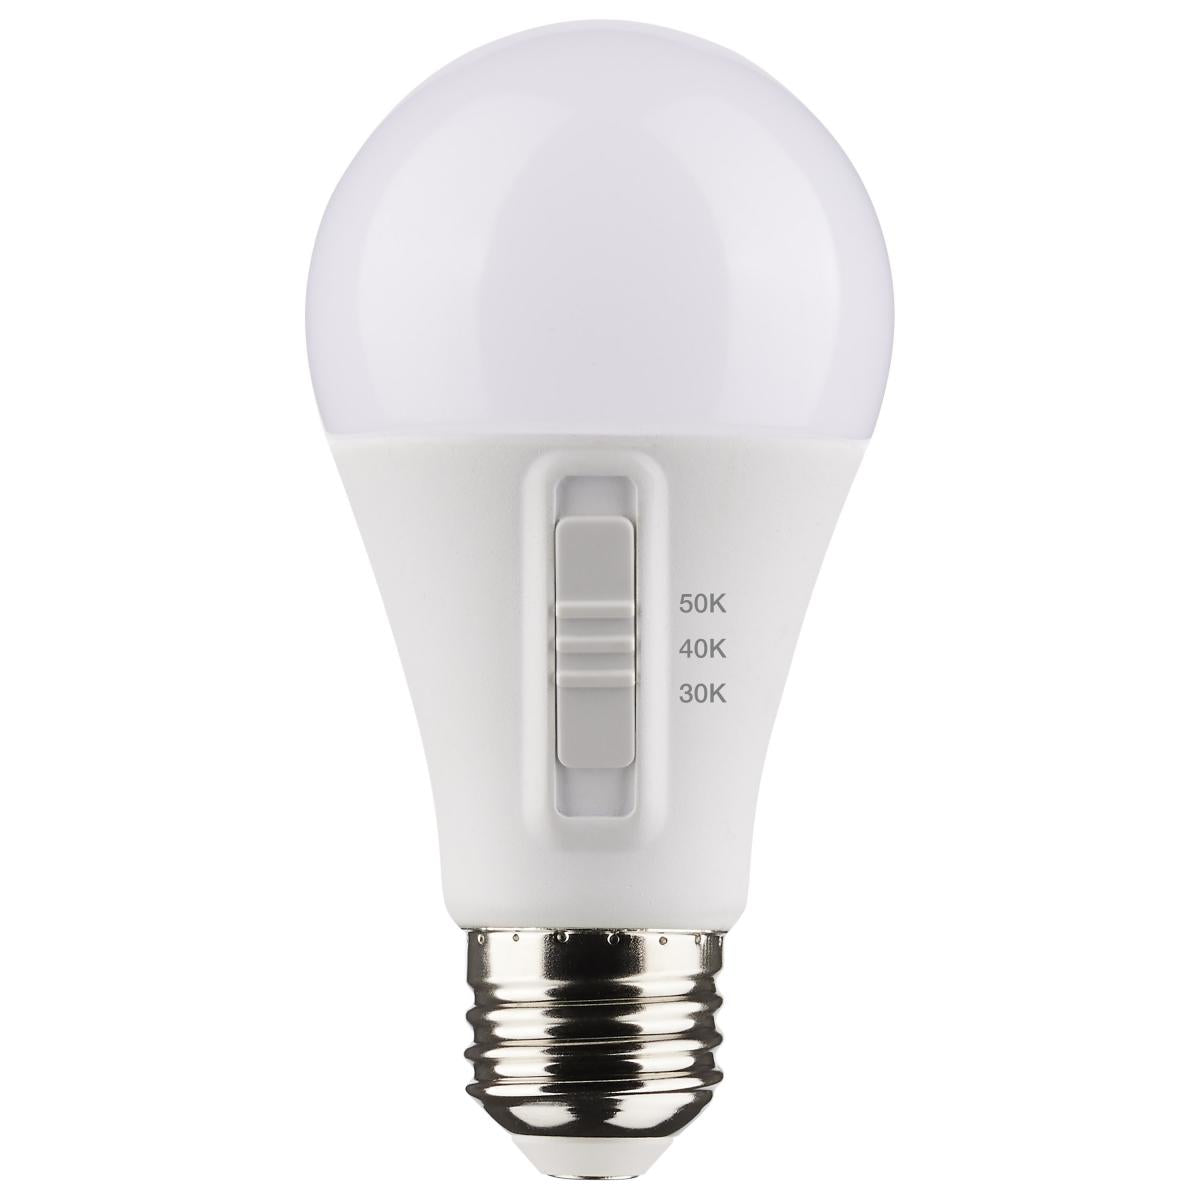 A19 LED Bulb, 75W Equivalent, 12 Watt, 1100 Lumens, Selectable CCT 30K/40K/50K, E26 Medium Base, Frosted Finish